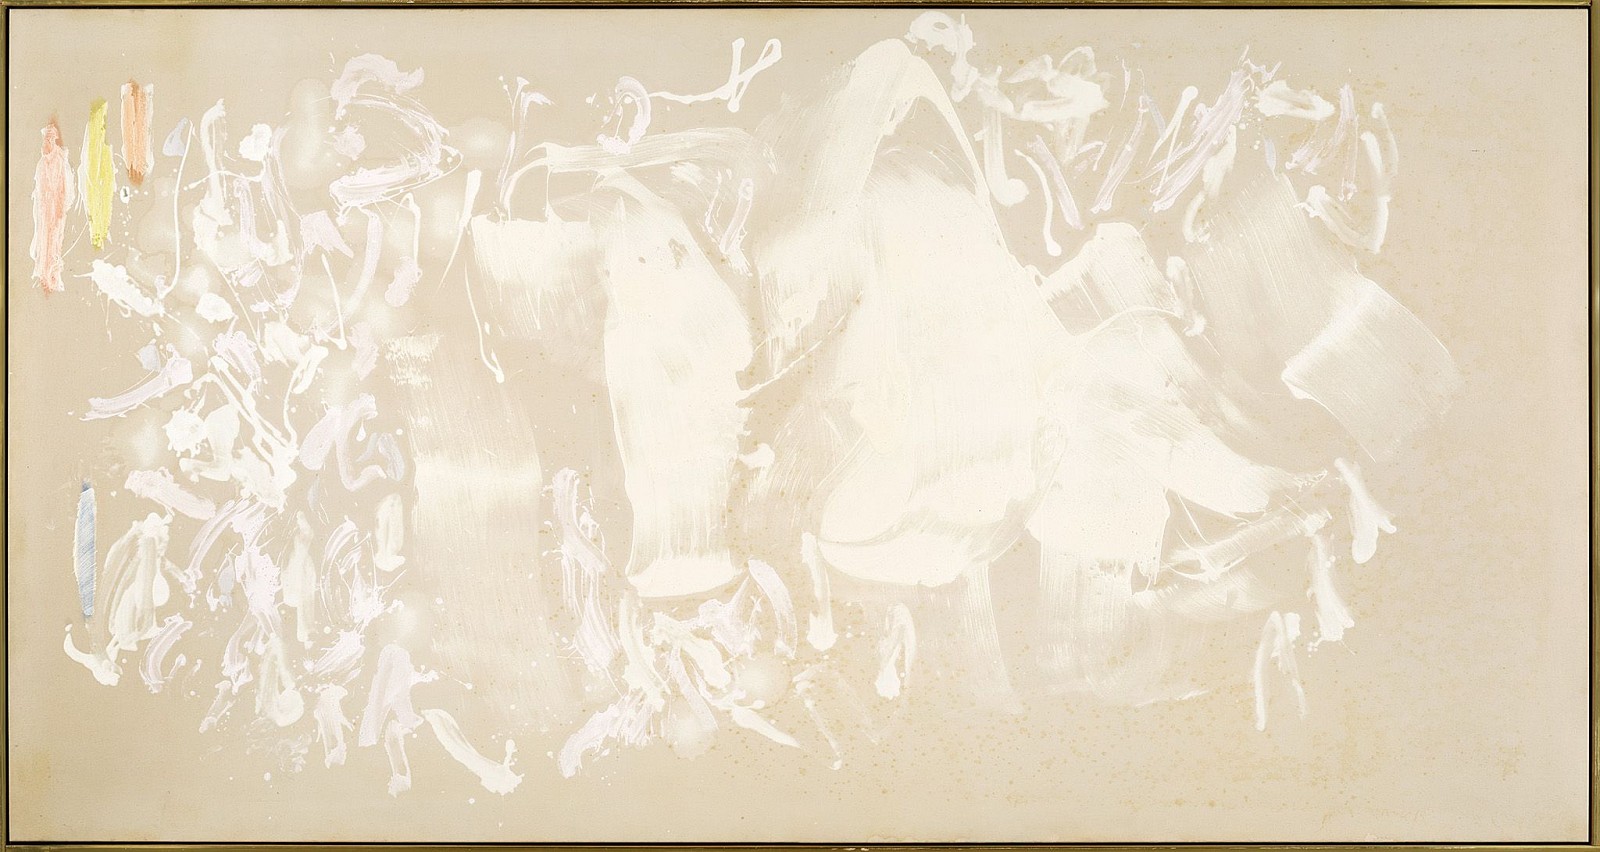 Dan Christensen, Atlantic Champagne, 1979
Acrylic on canvas, 69 1/2 x 131 1/2 in. (176.5 x 334 cm)
CHR-00093